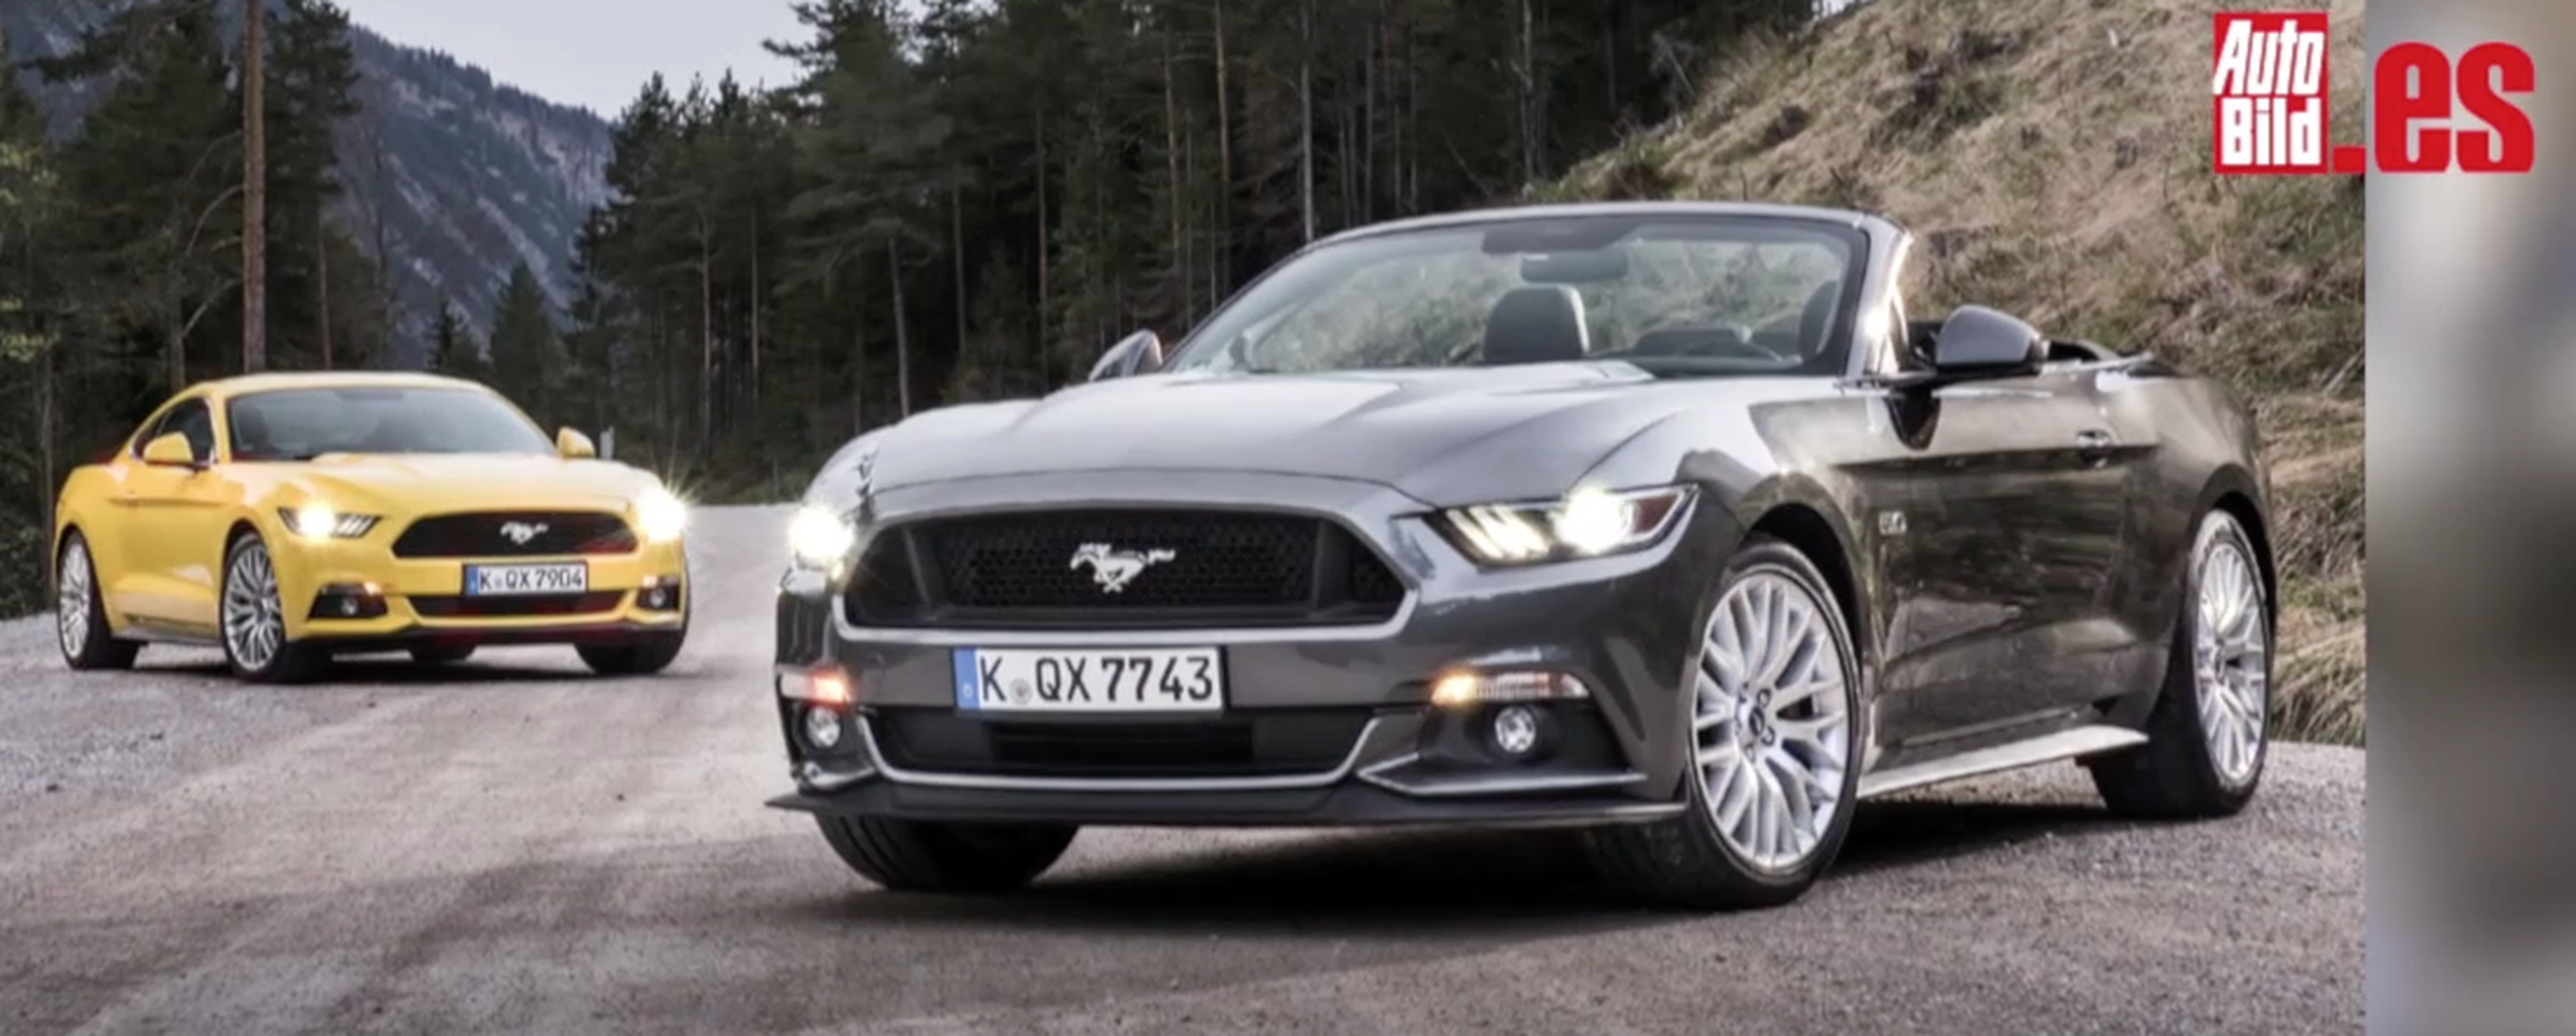 VÍDEO: Las 5 claves del Ford Mustang